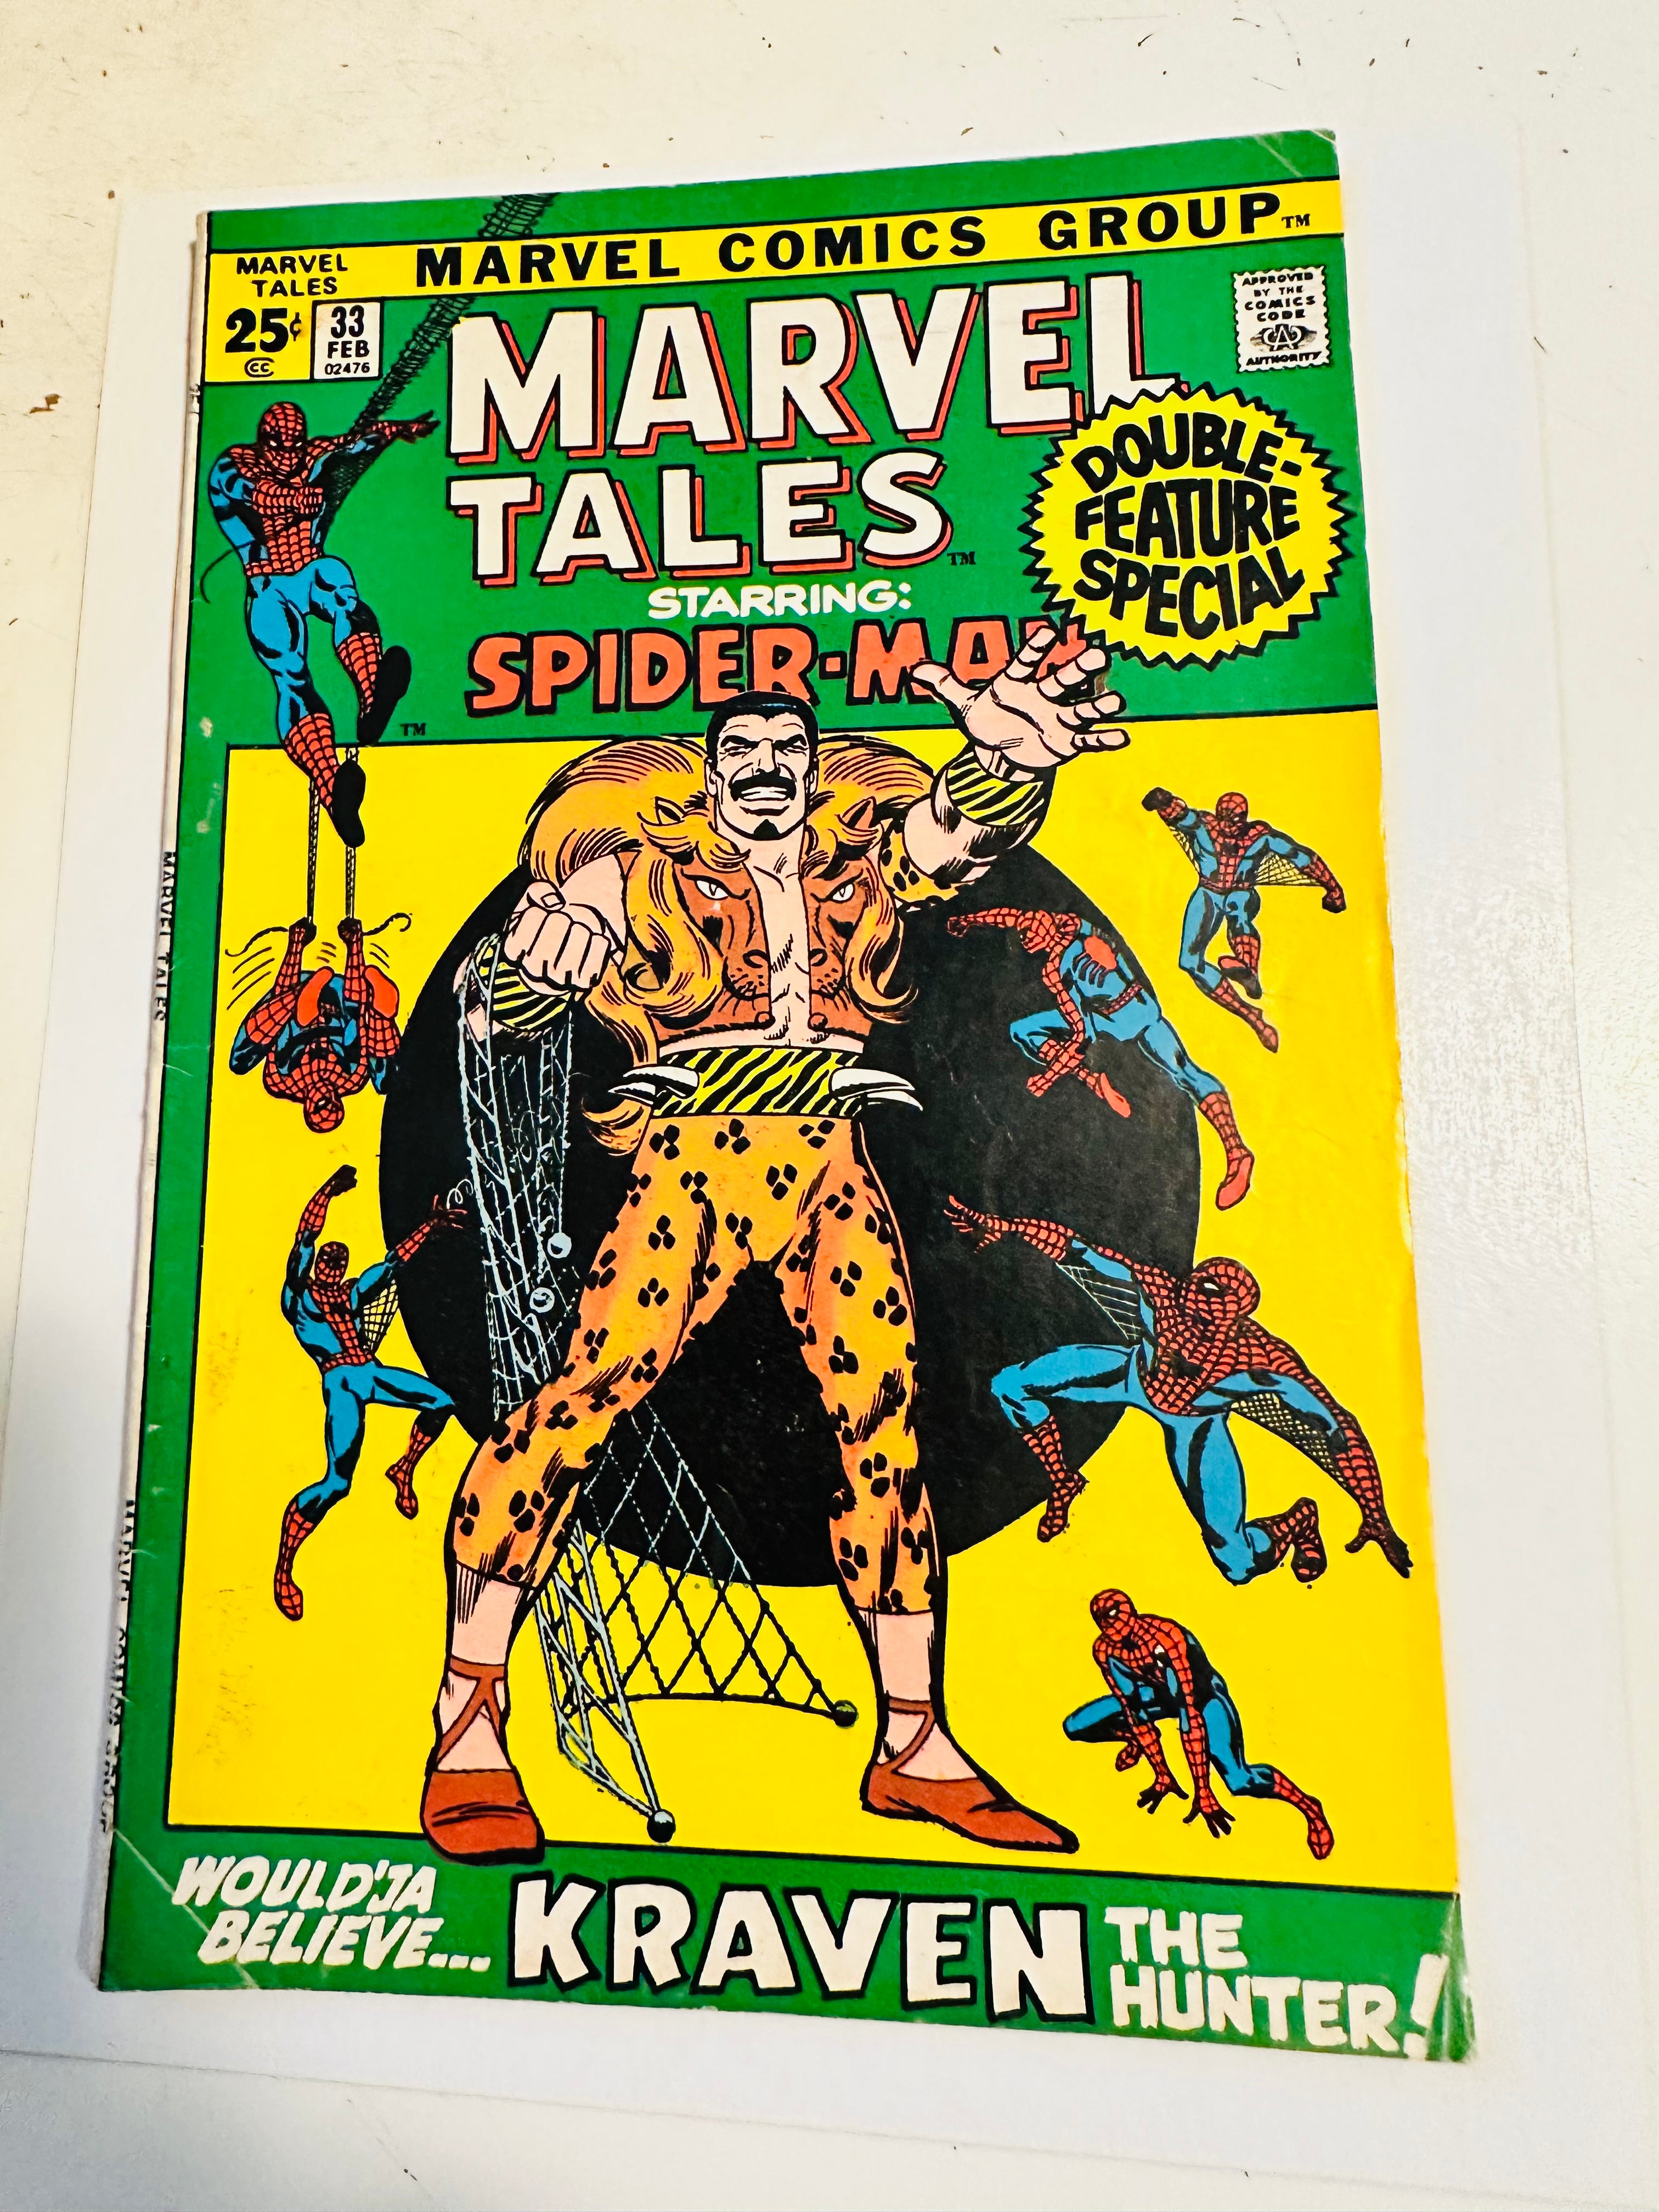 ￼ Marvel Tales Spider-Man versus Craven number 33, 1972